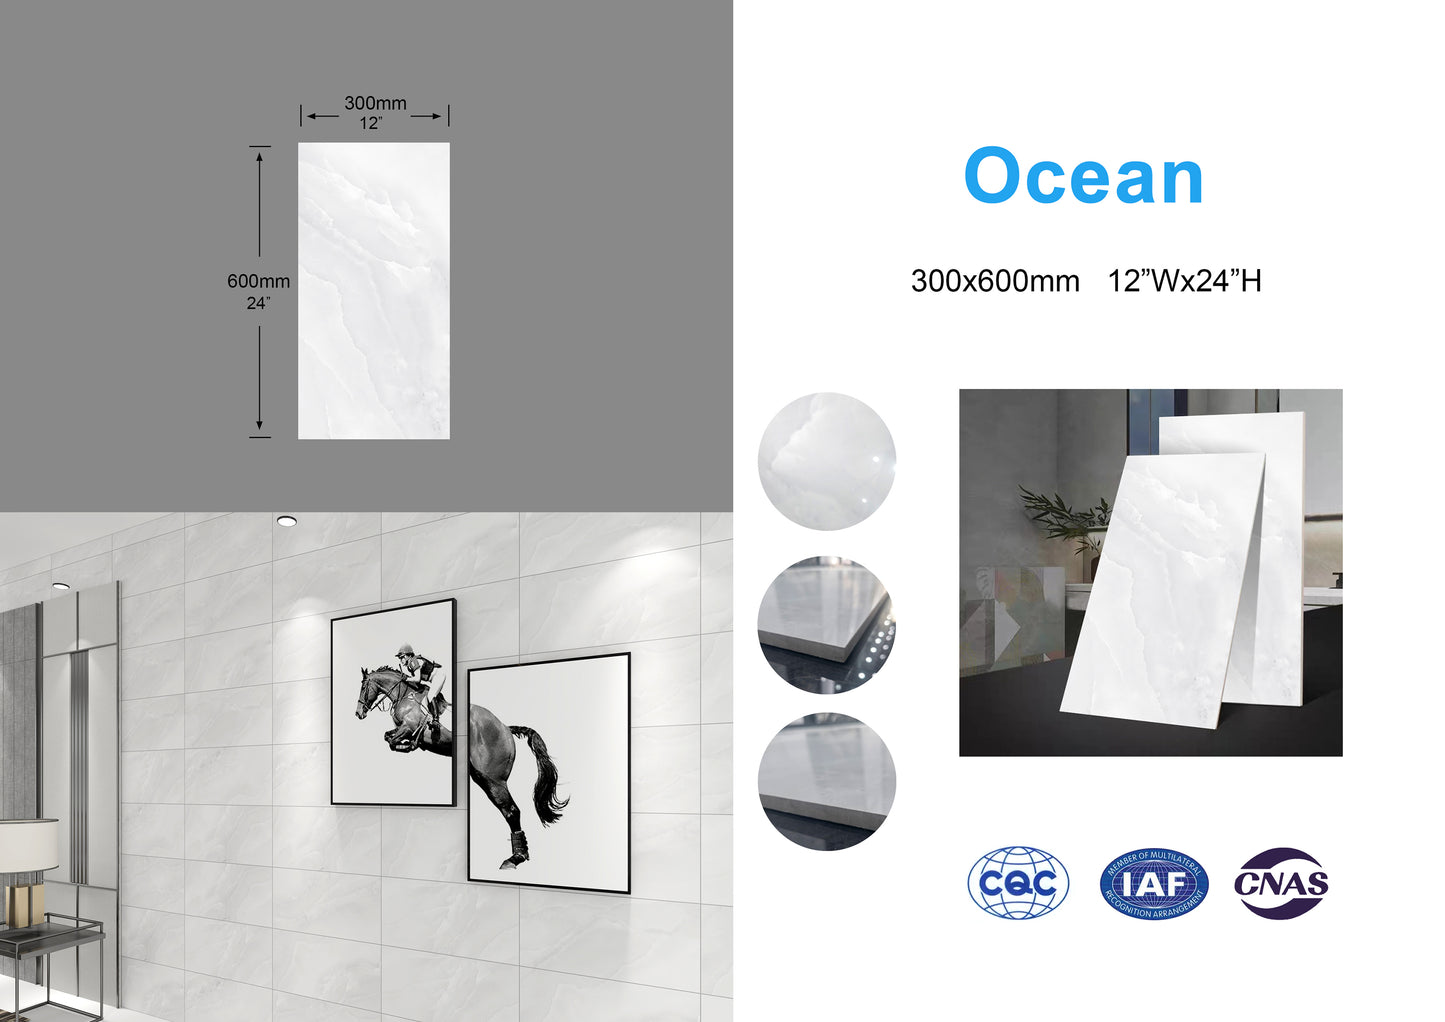 Ocean family Full Polished Glazed Tile light gray 12"x24" 8pcs/box 16sf/box $20.64/box $1.29/sf (15 days return/exchange) Bulk Deal 1000sf+ $1.09/SF(No return/no exchange)